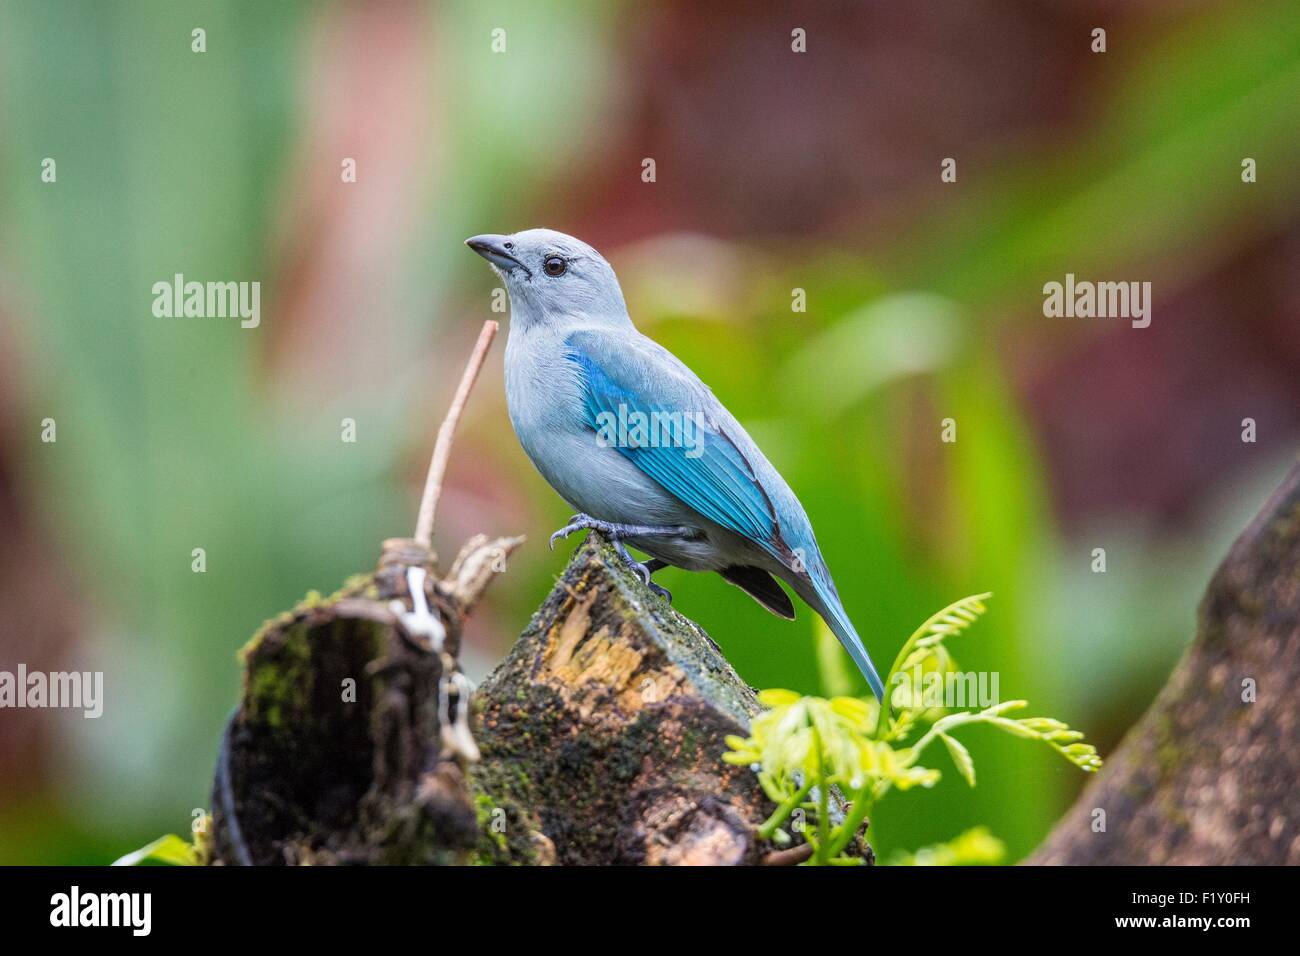 Costa Rica, Alajuela province, Arenal, tropical bird Stock Photo